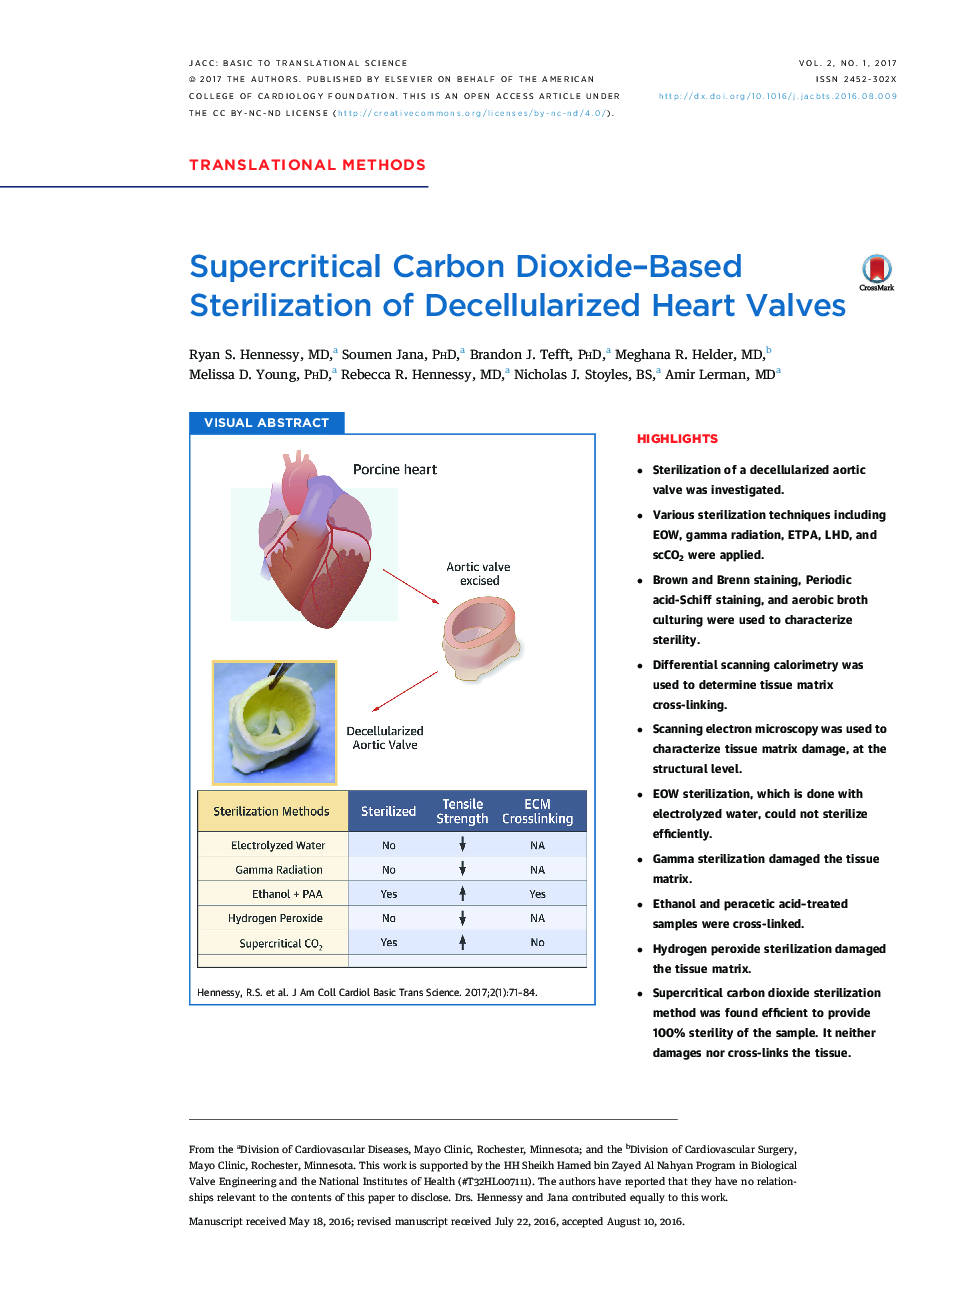 Supercritical Carbon Dioxide-Based Sterilization of Decellularized Heart Valves